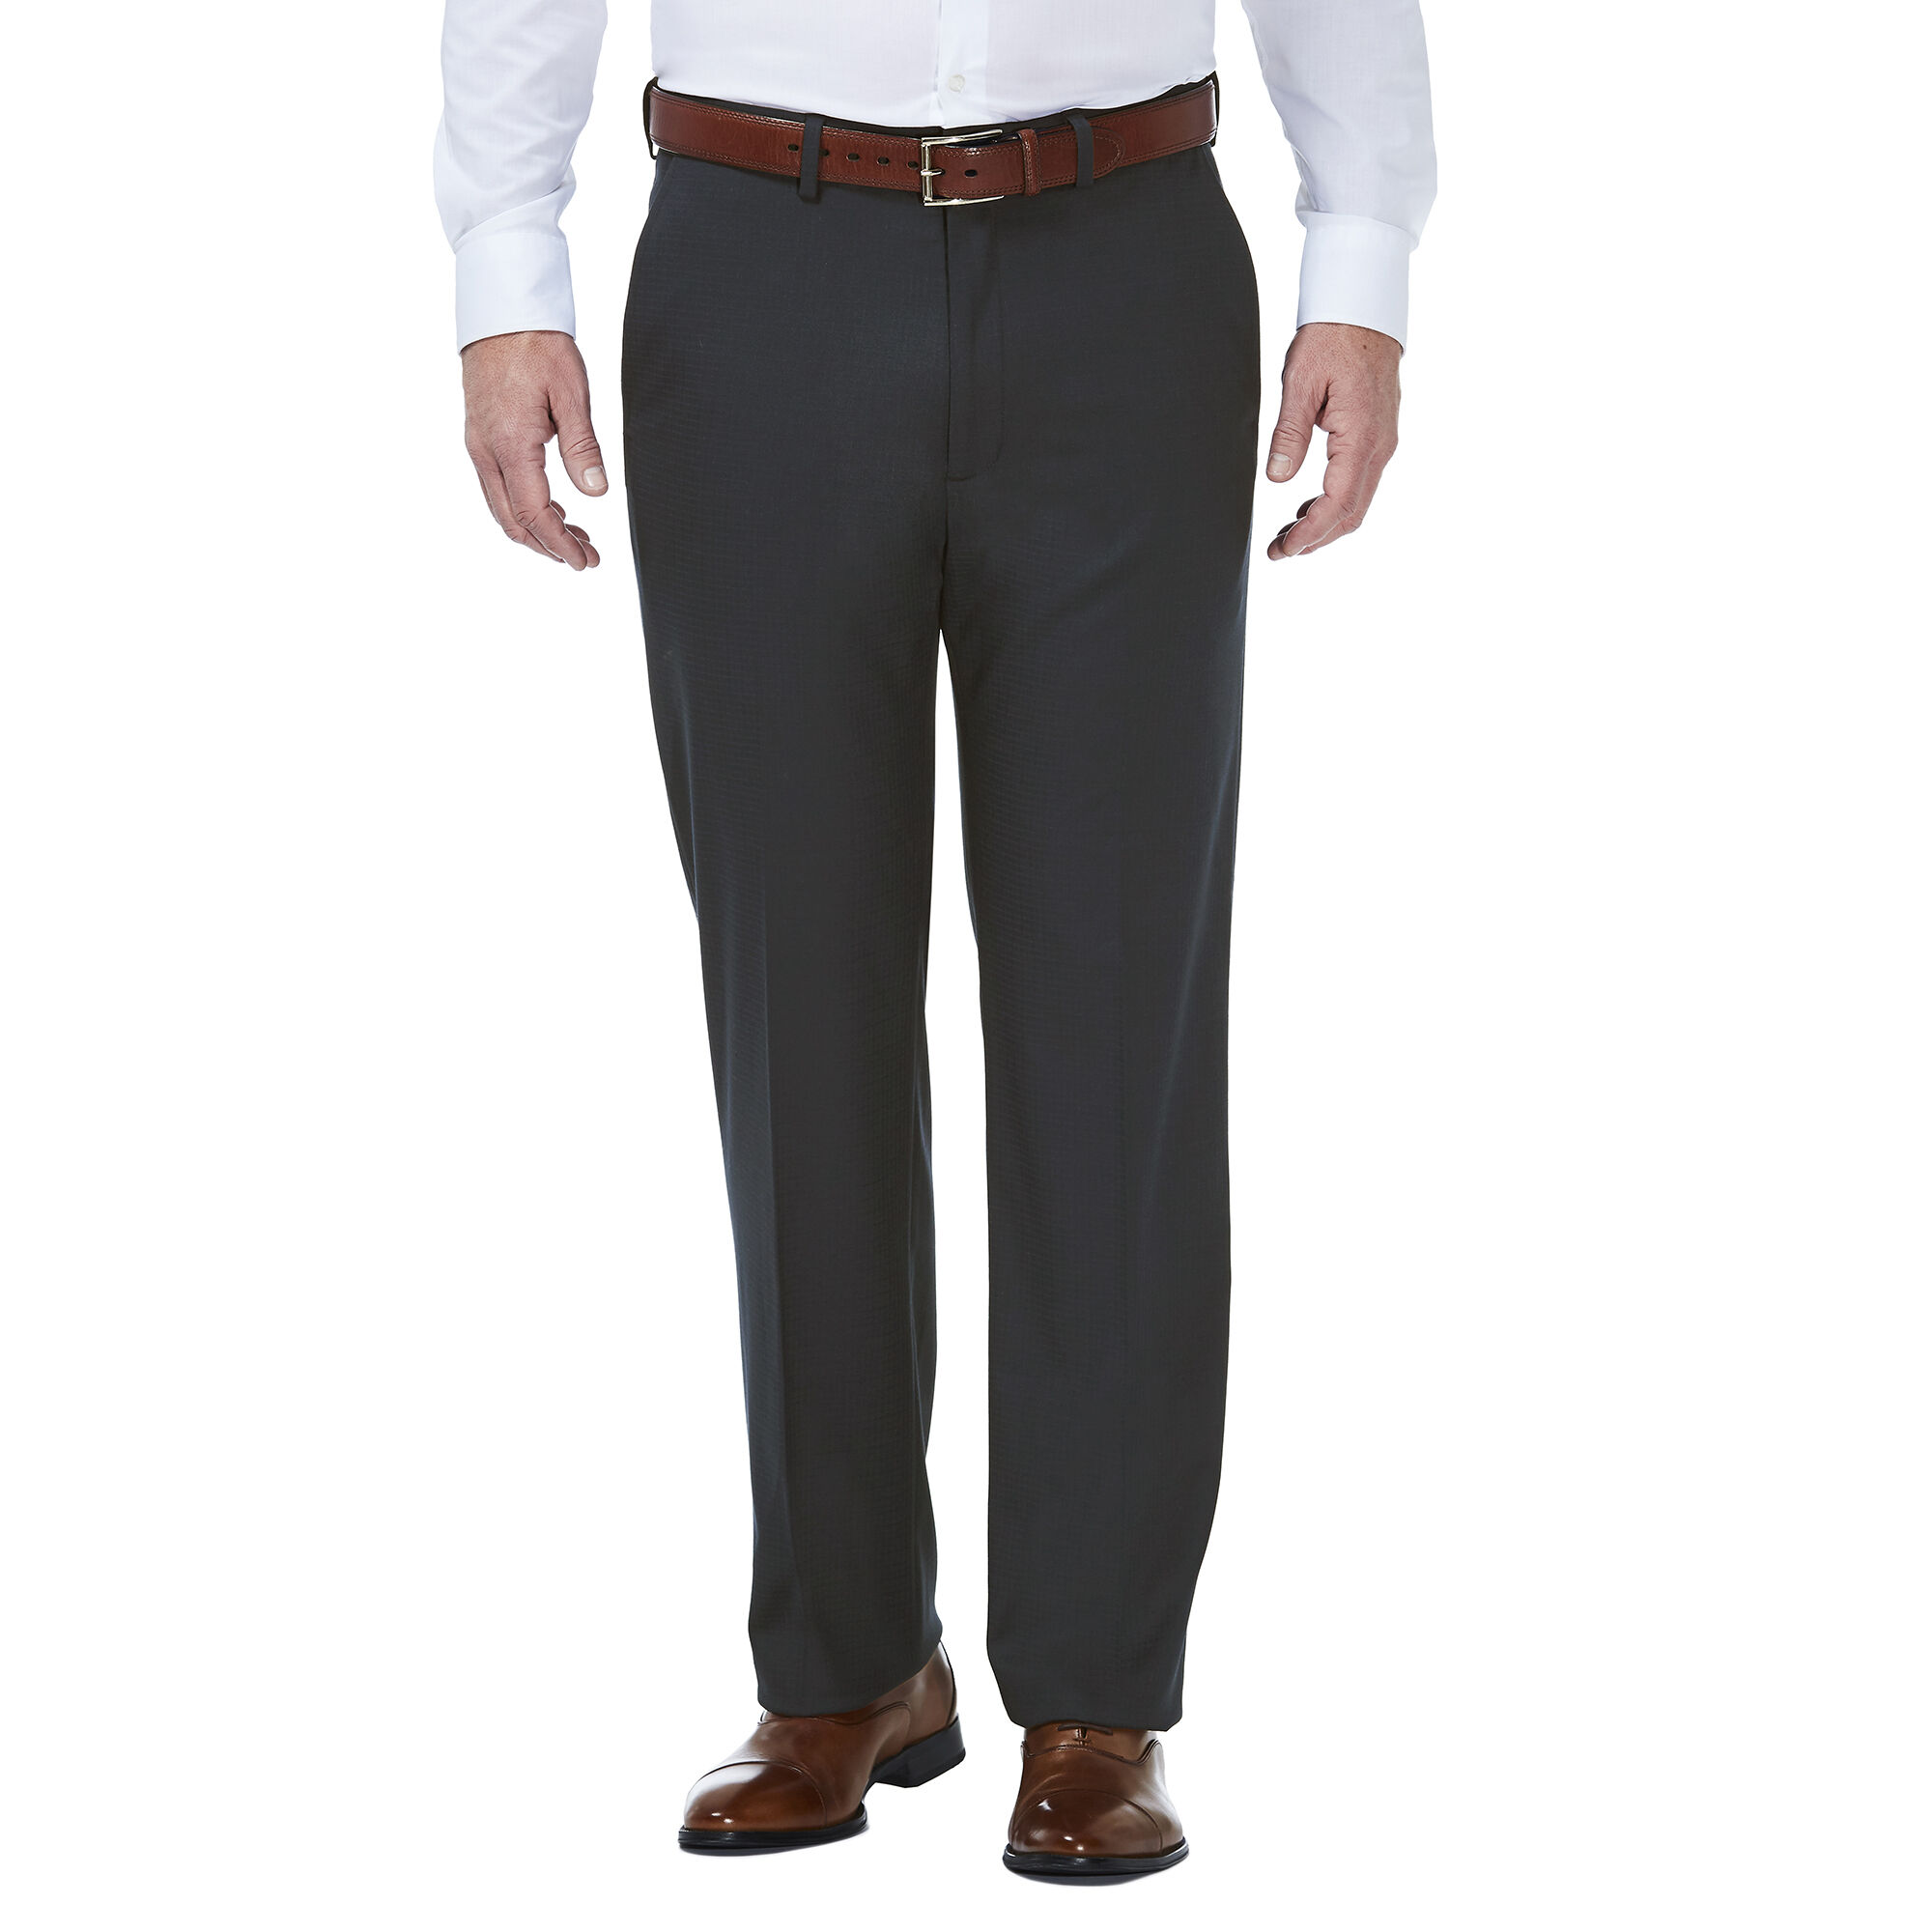 J.M. Haggar Grid Suit Pant Black / Charcoal (HY00275 Clothing Pants) photo